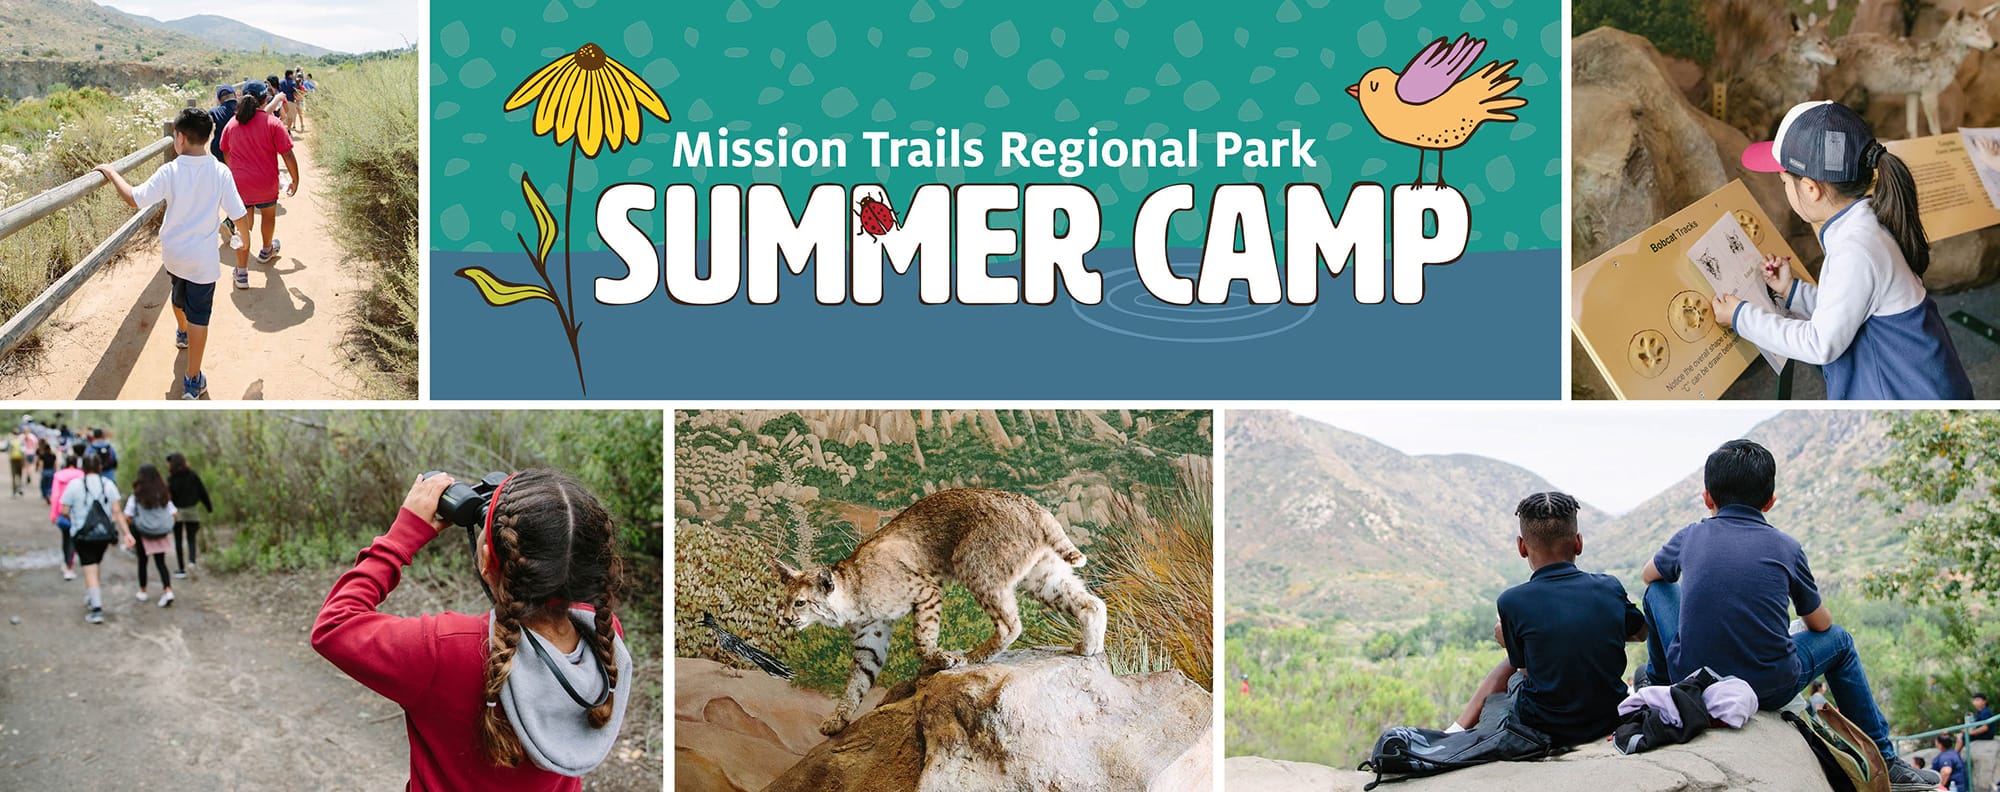 Mission Trails Regional Park Summer Camp